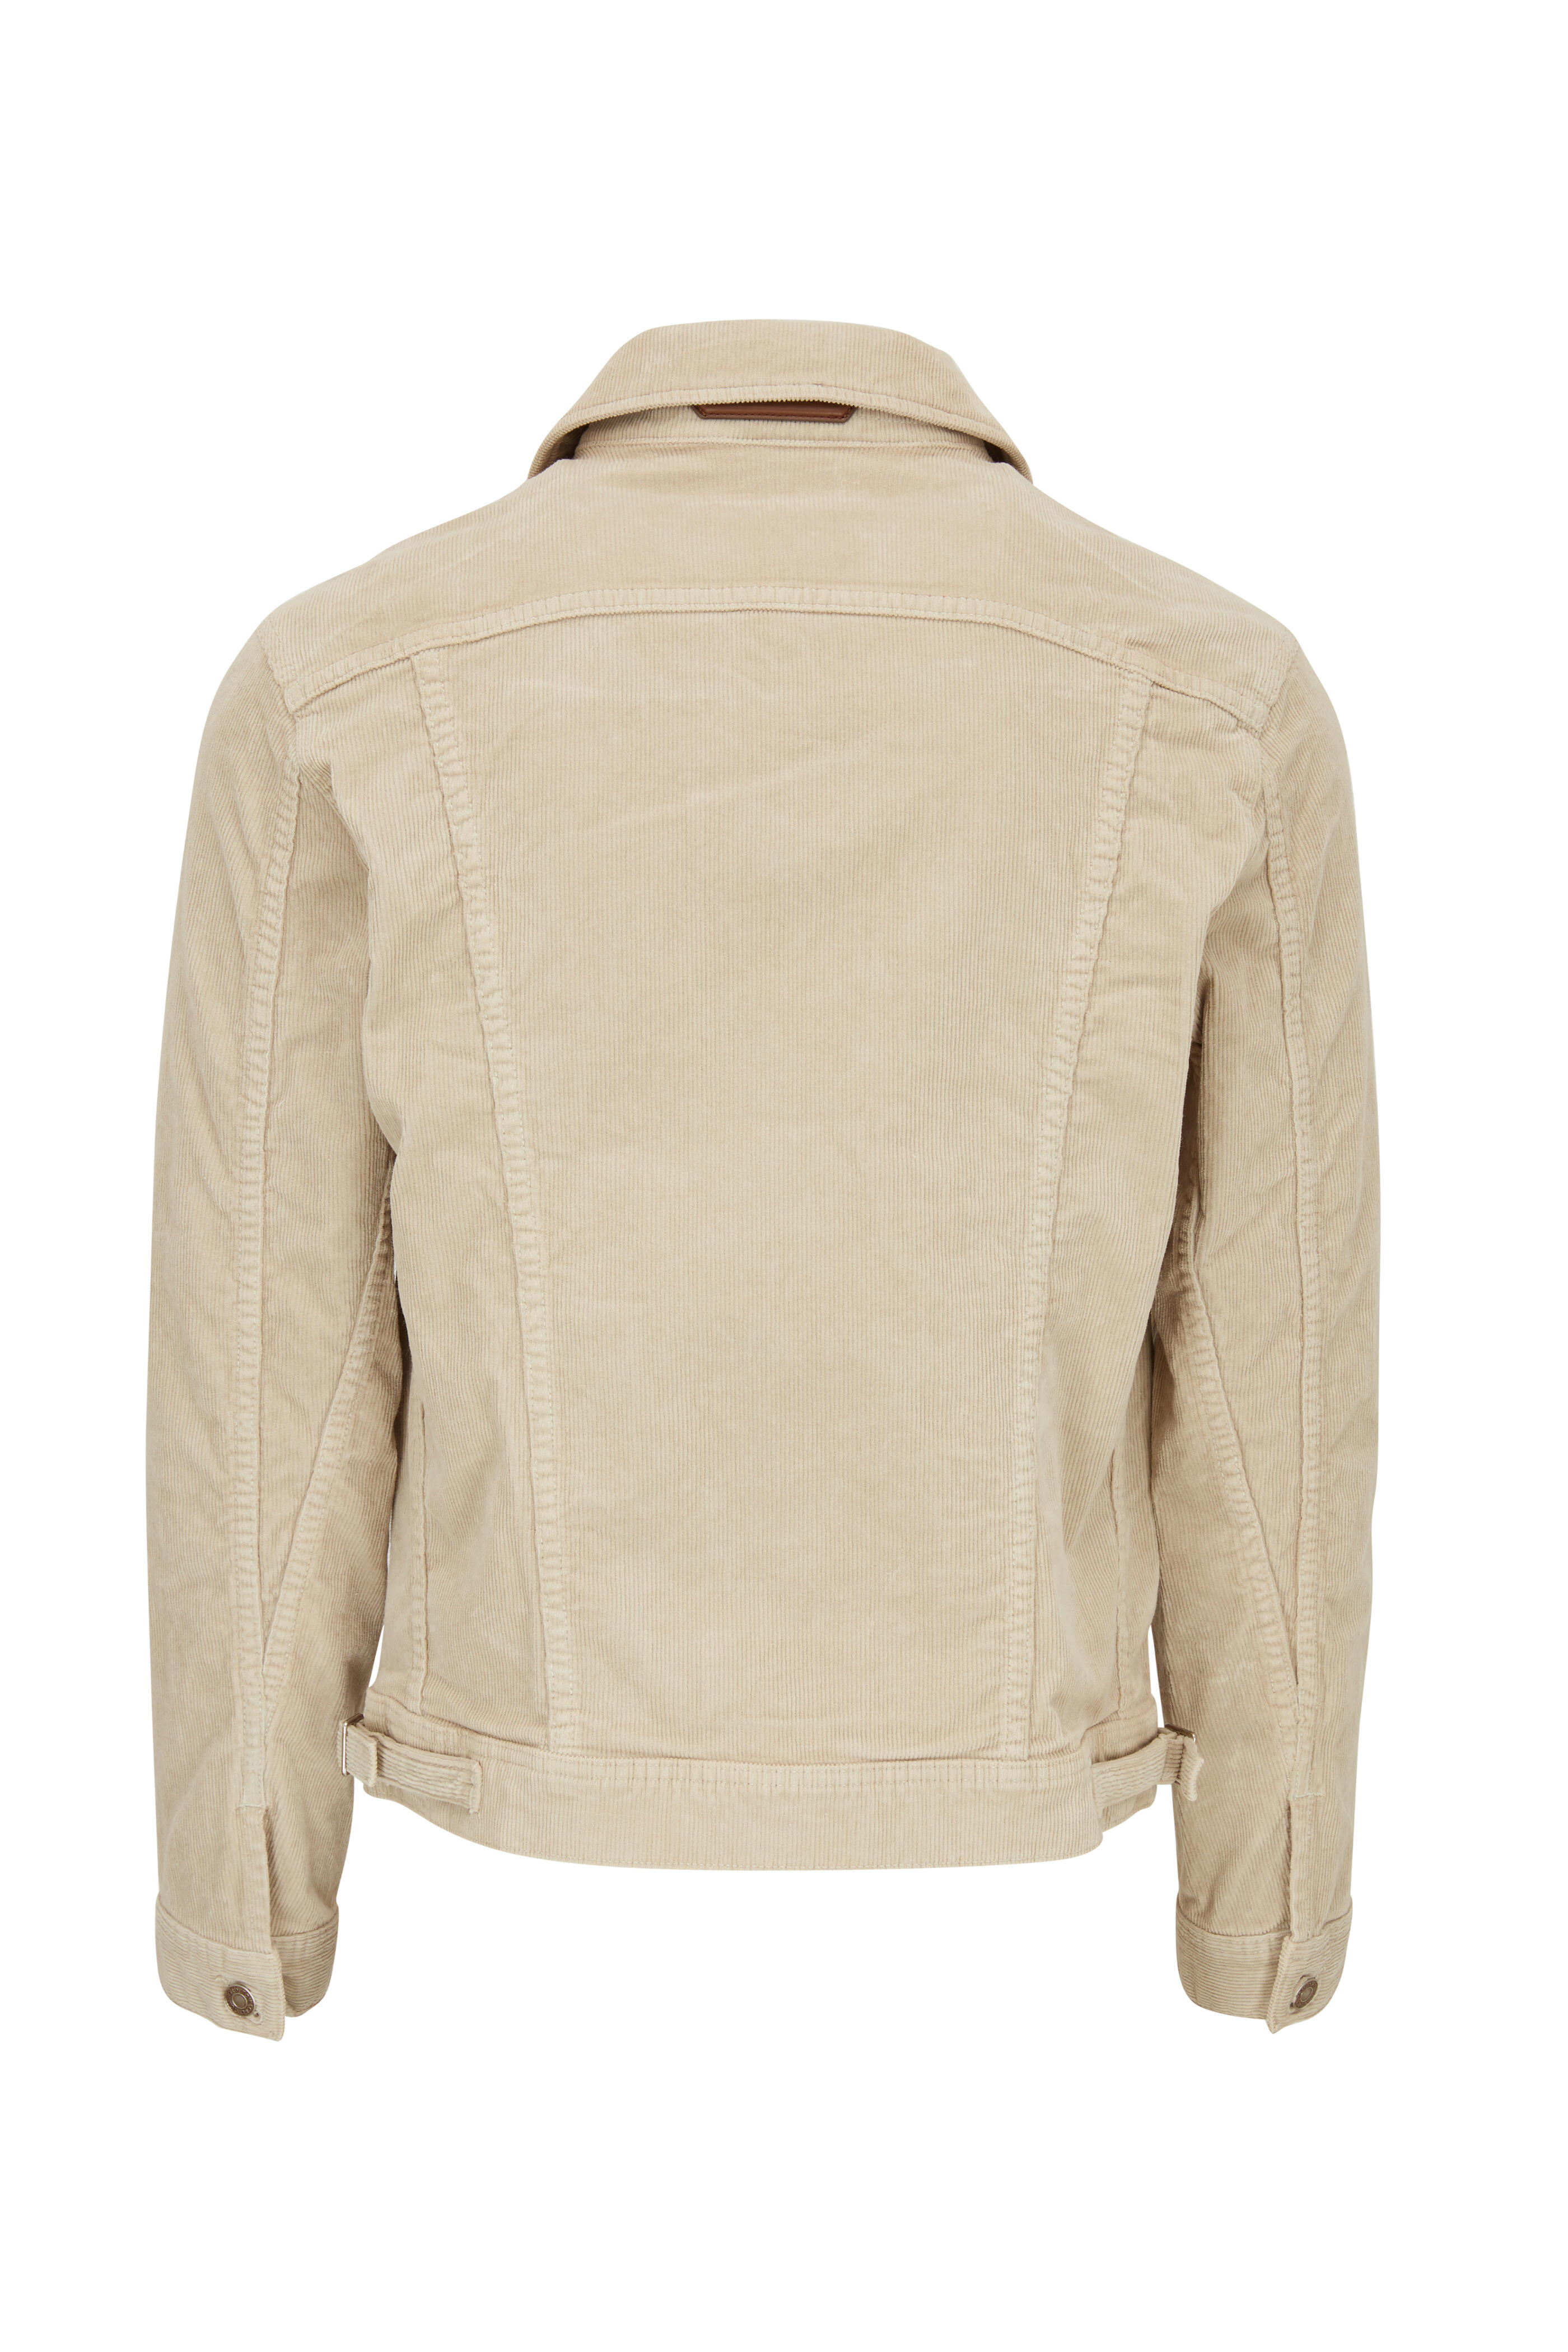 Tom Ford - Beige Stretch Cotton Corduroy Jacket